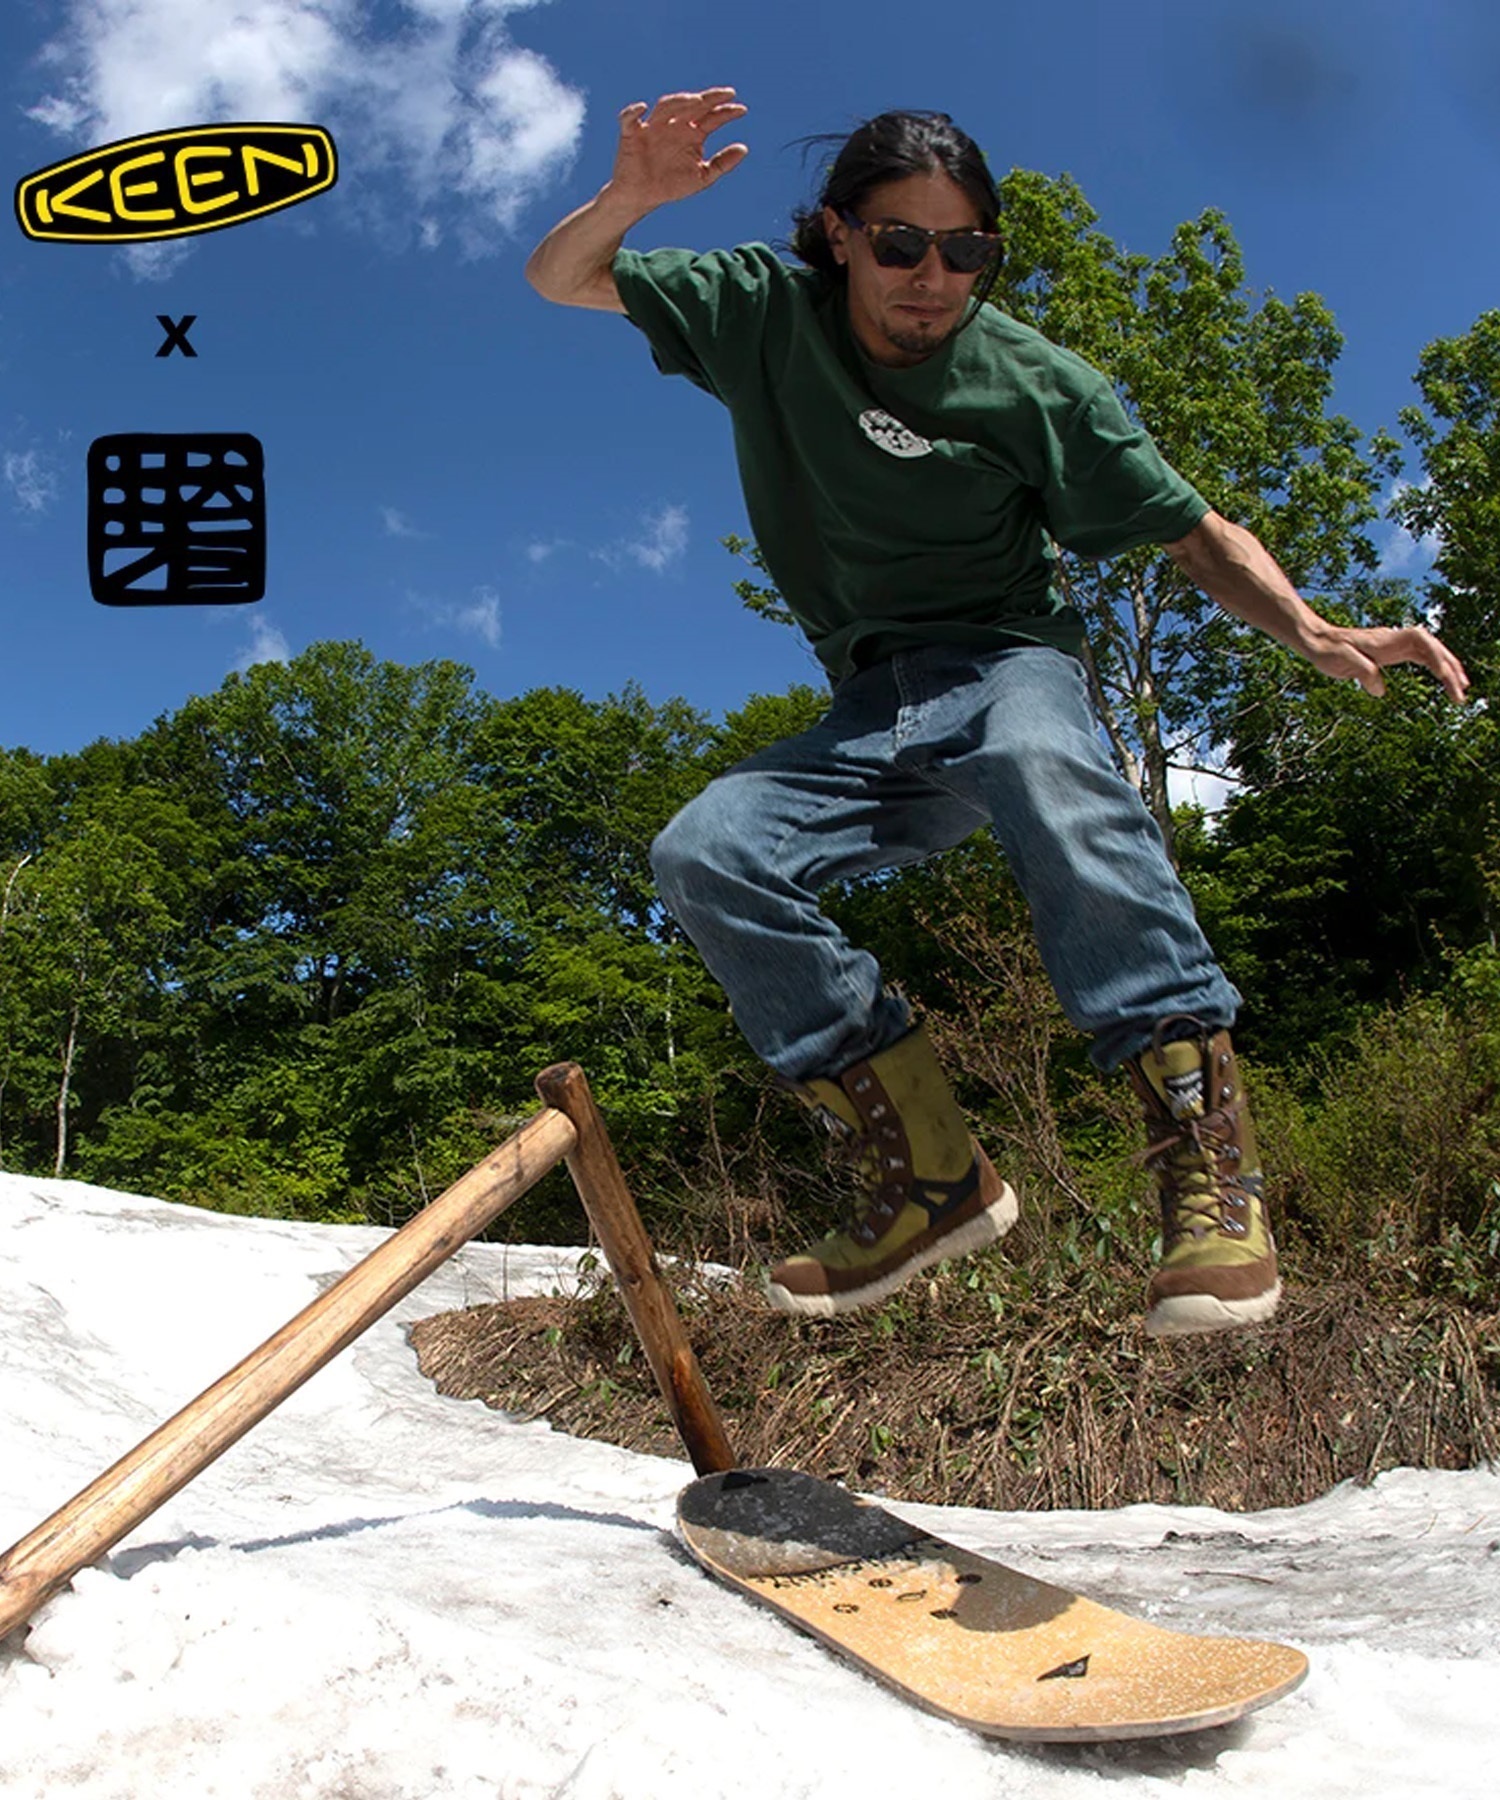 KEEN/キーン × ATSUSHI GOMYO コラボ メンズ グリーザー トール ウォータープルーフ 防水ウインターブーツ オリーブ 1027734(ODDE-26.0cm)